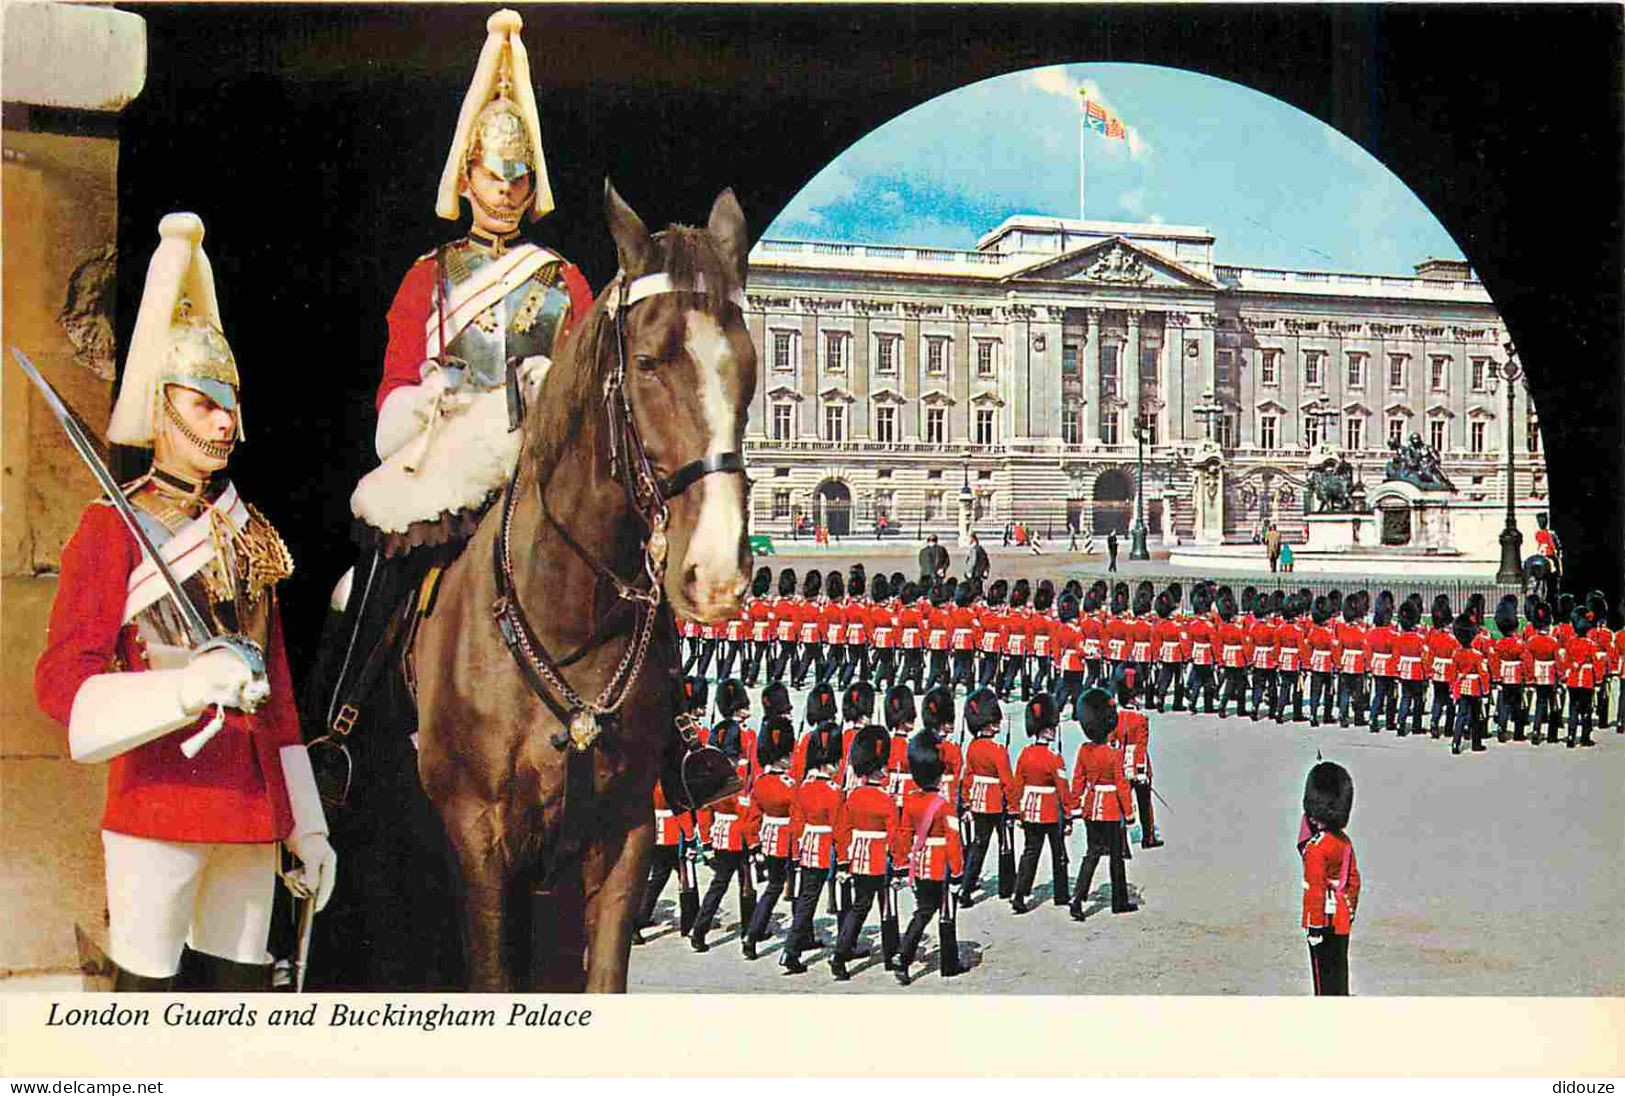 Angleterre - London - Buckingham Palace - London Guards And Buckingham Palace - London - England - Royaume Uni - UK - Un - Buckingham Palace